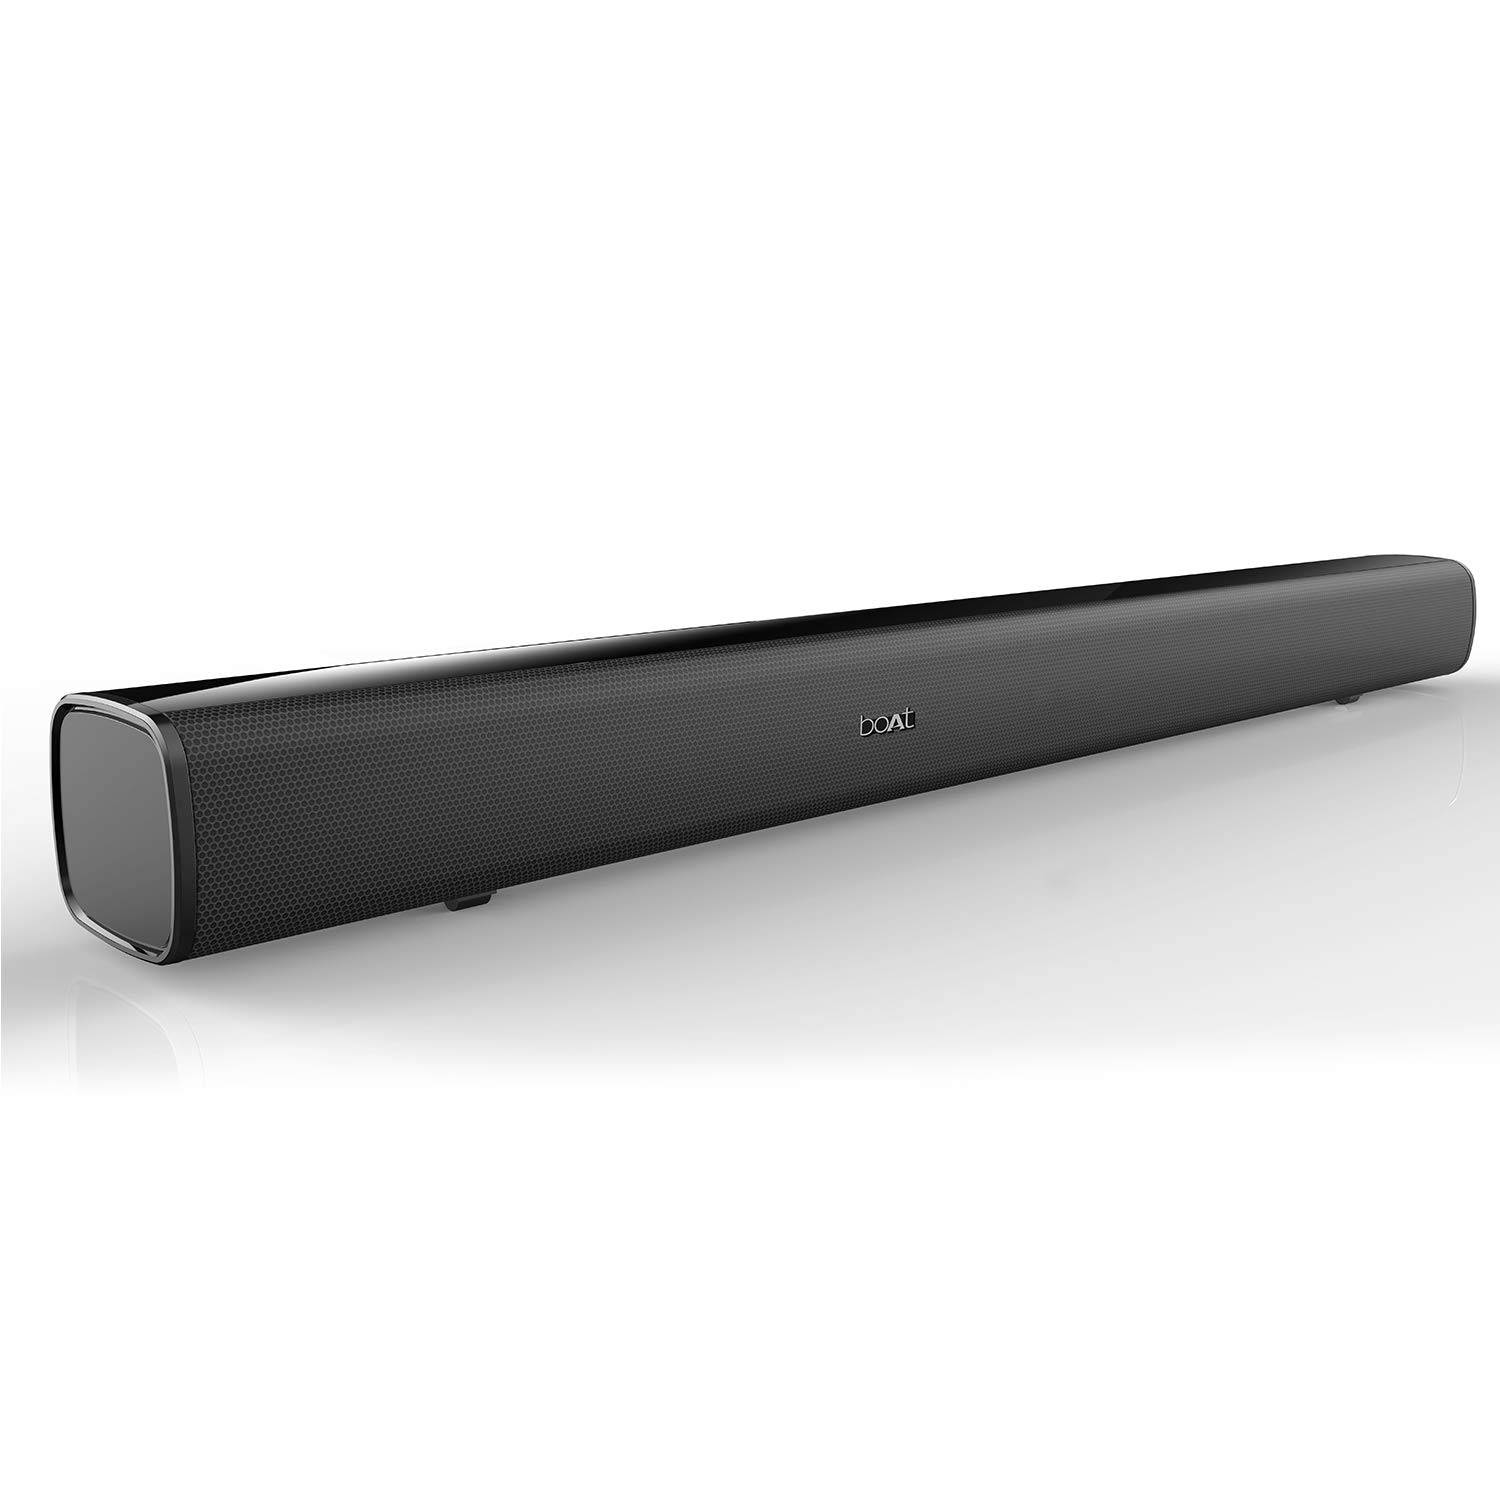 Amazon Navratri Sale: Take home BOAT soundbar for less than 4 thousand, great deal on soundbar in Amazon's sale